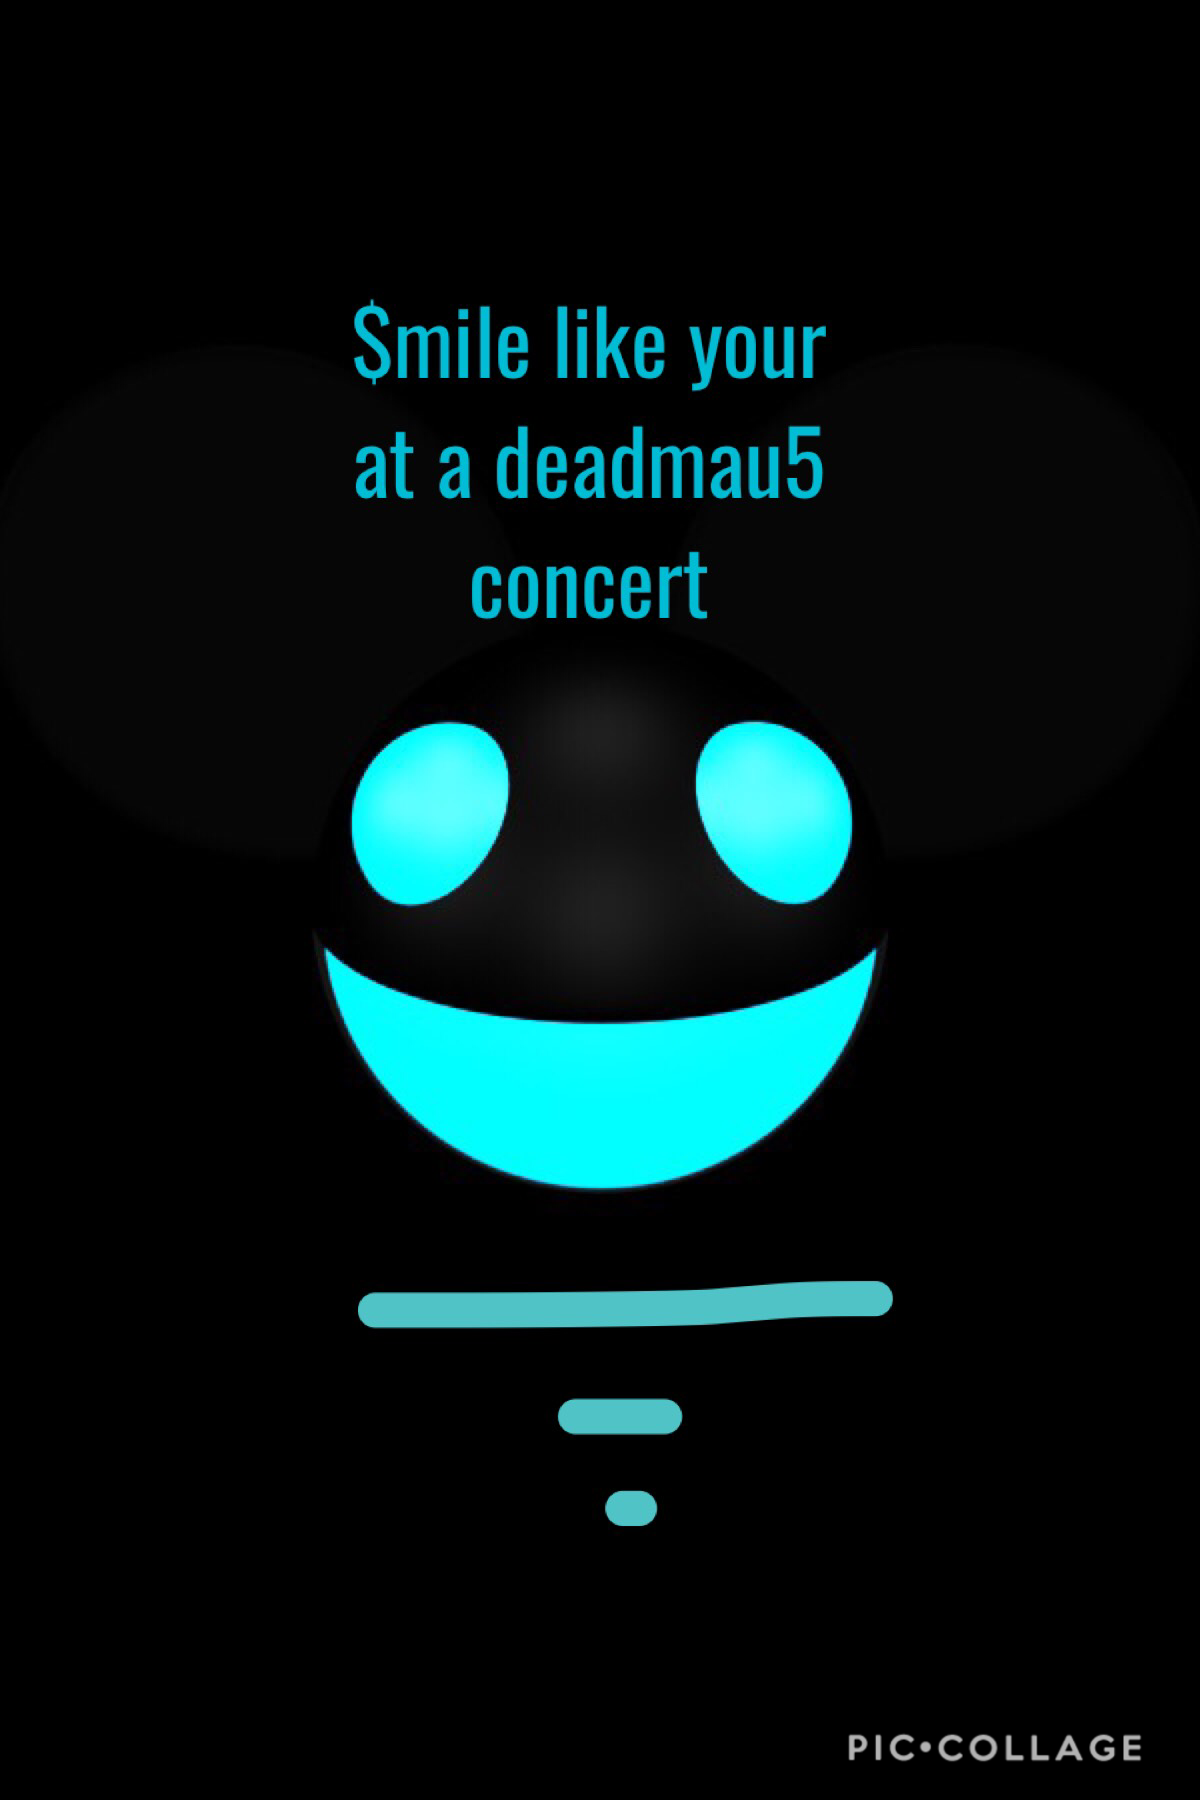 The “deadmau5 smile “